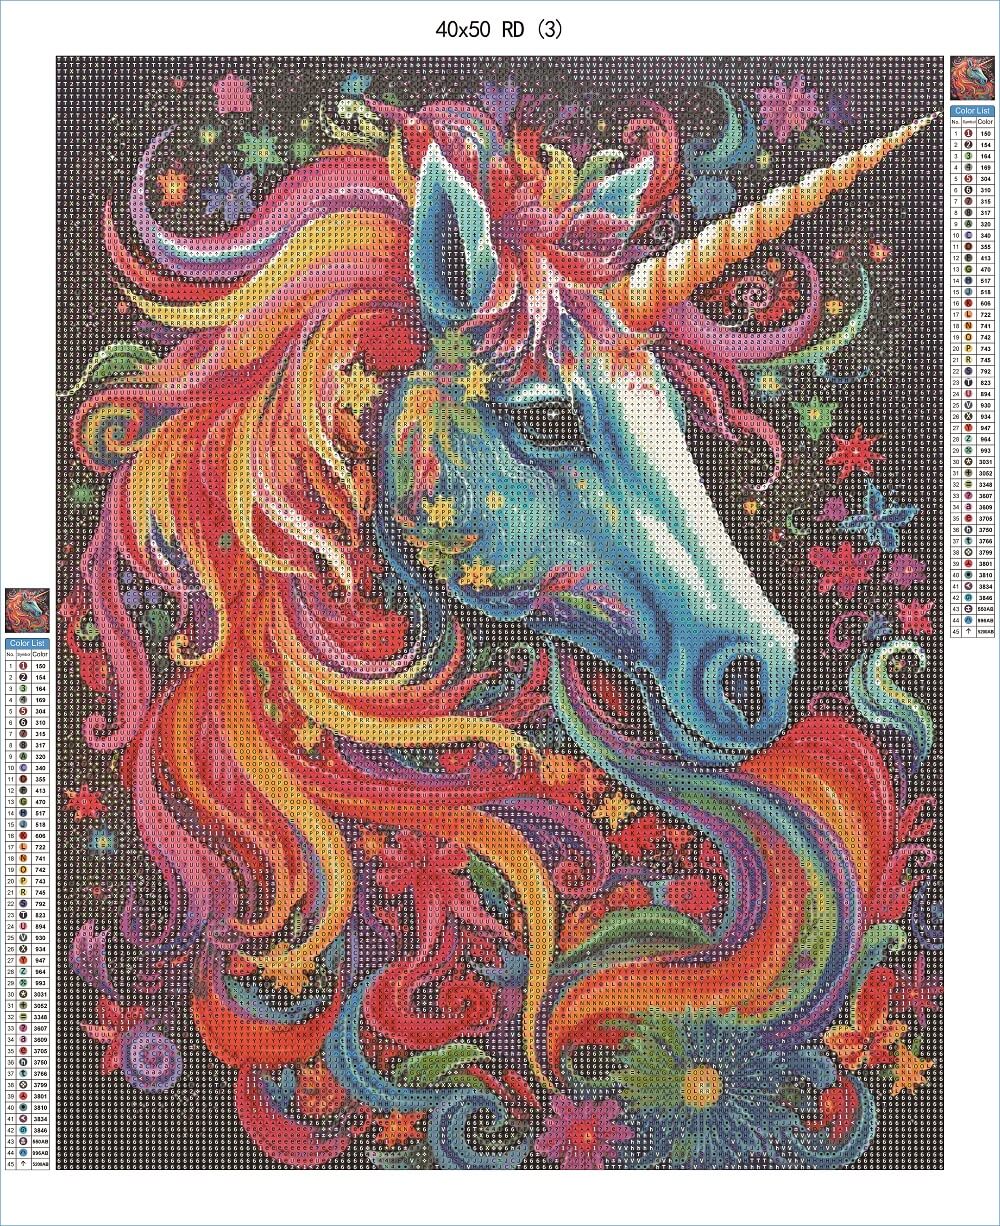 Colorful Whisper of the Unicorn 40x50 RD - AB Diamond Art